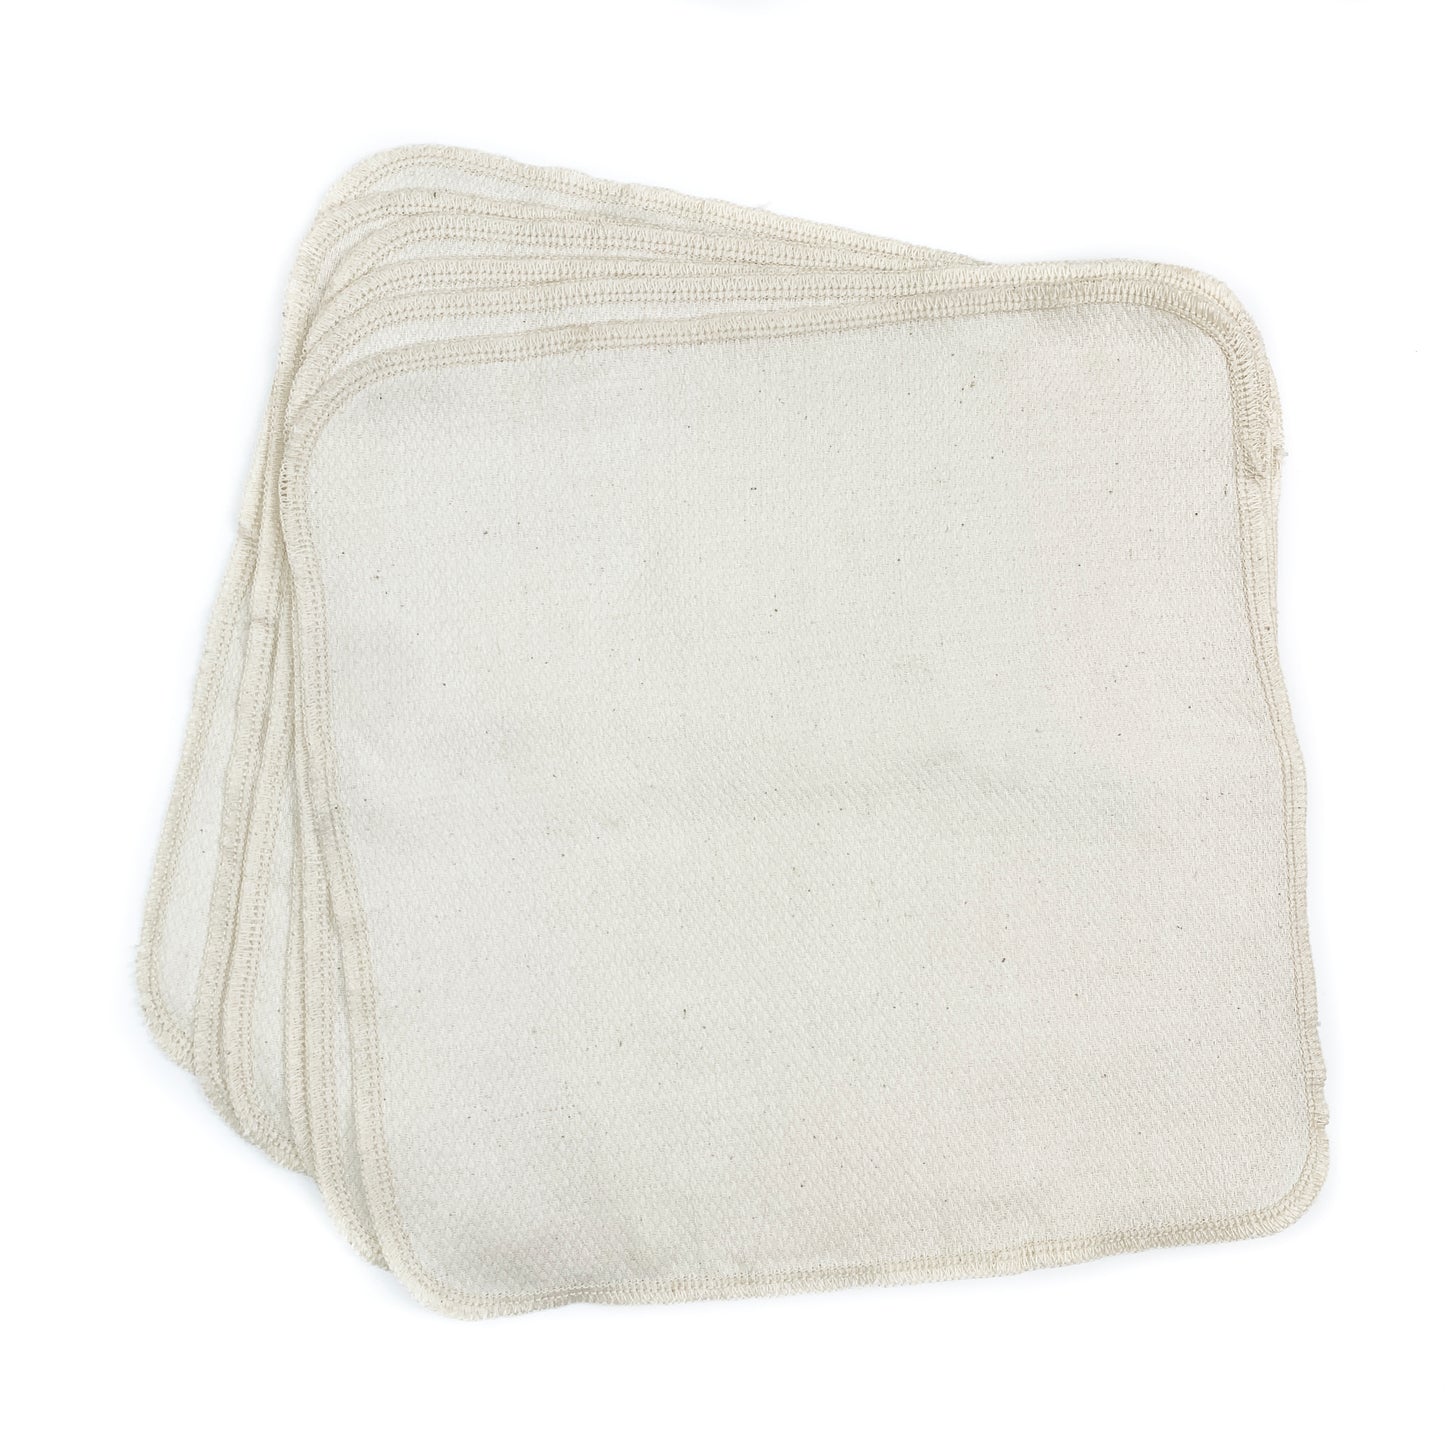 Reusable 10" x 10" Organic Birdseye Cotton Unpaper Towels (Pack of 6)